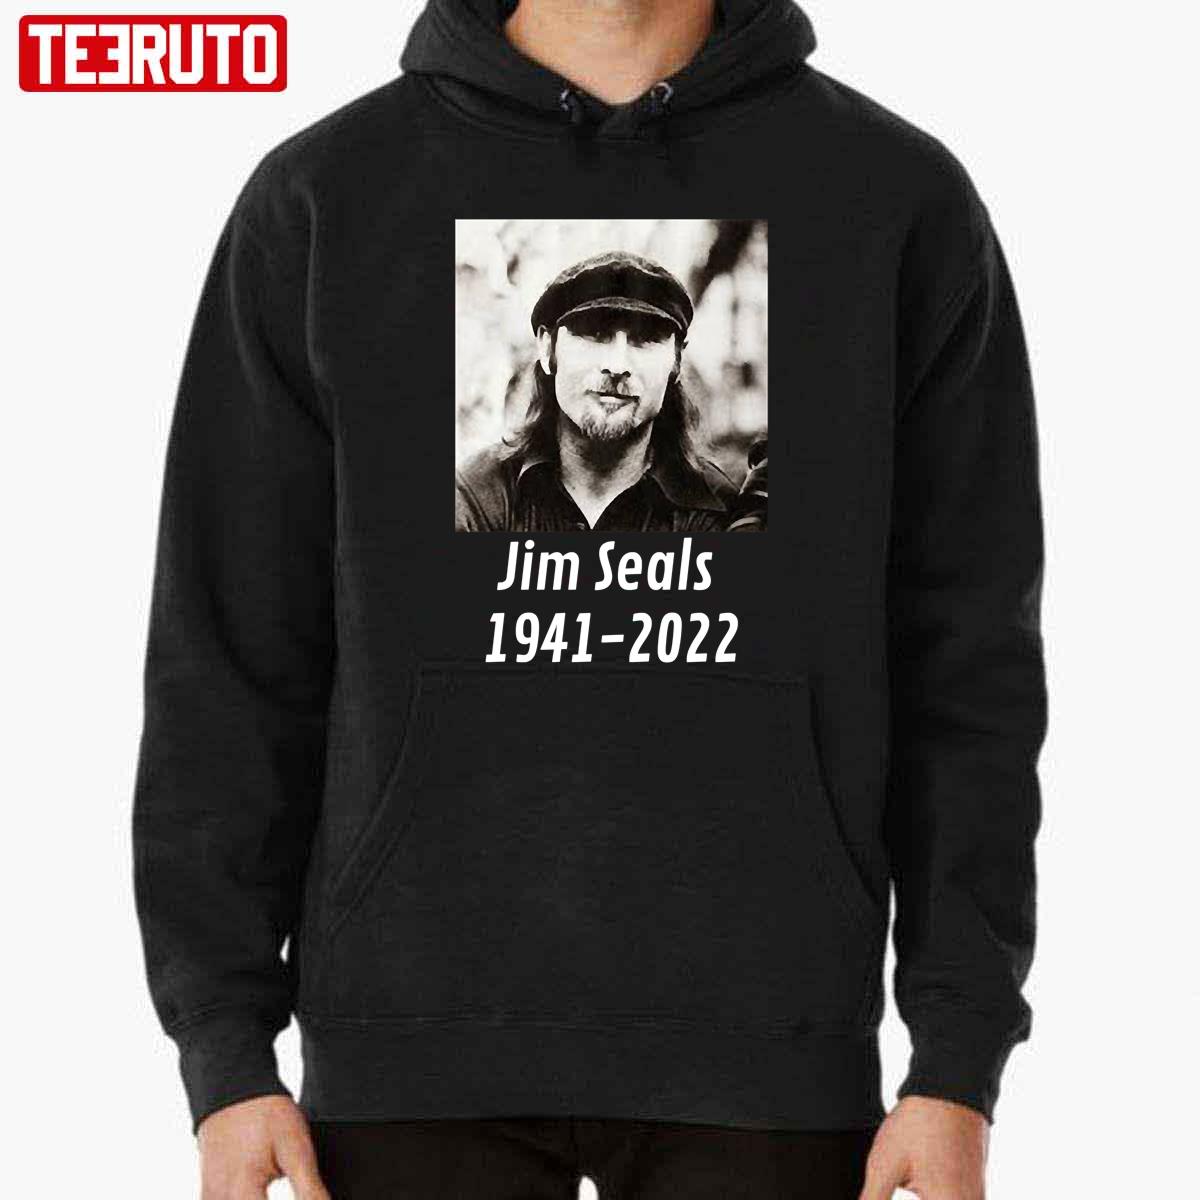 Rip Jim Seals Unisex Sweatshirt